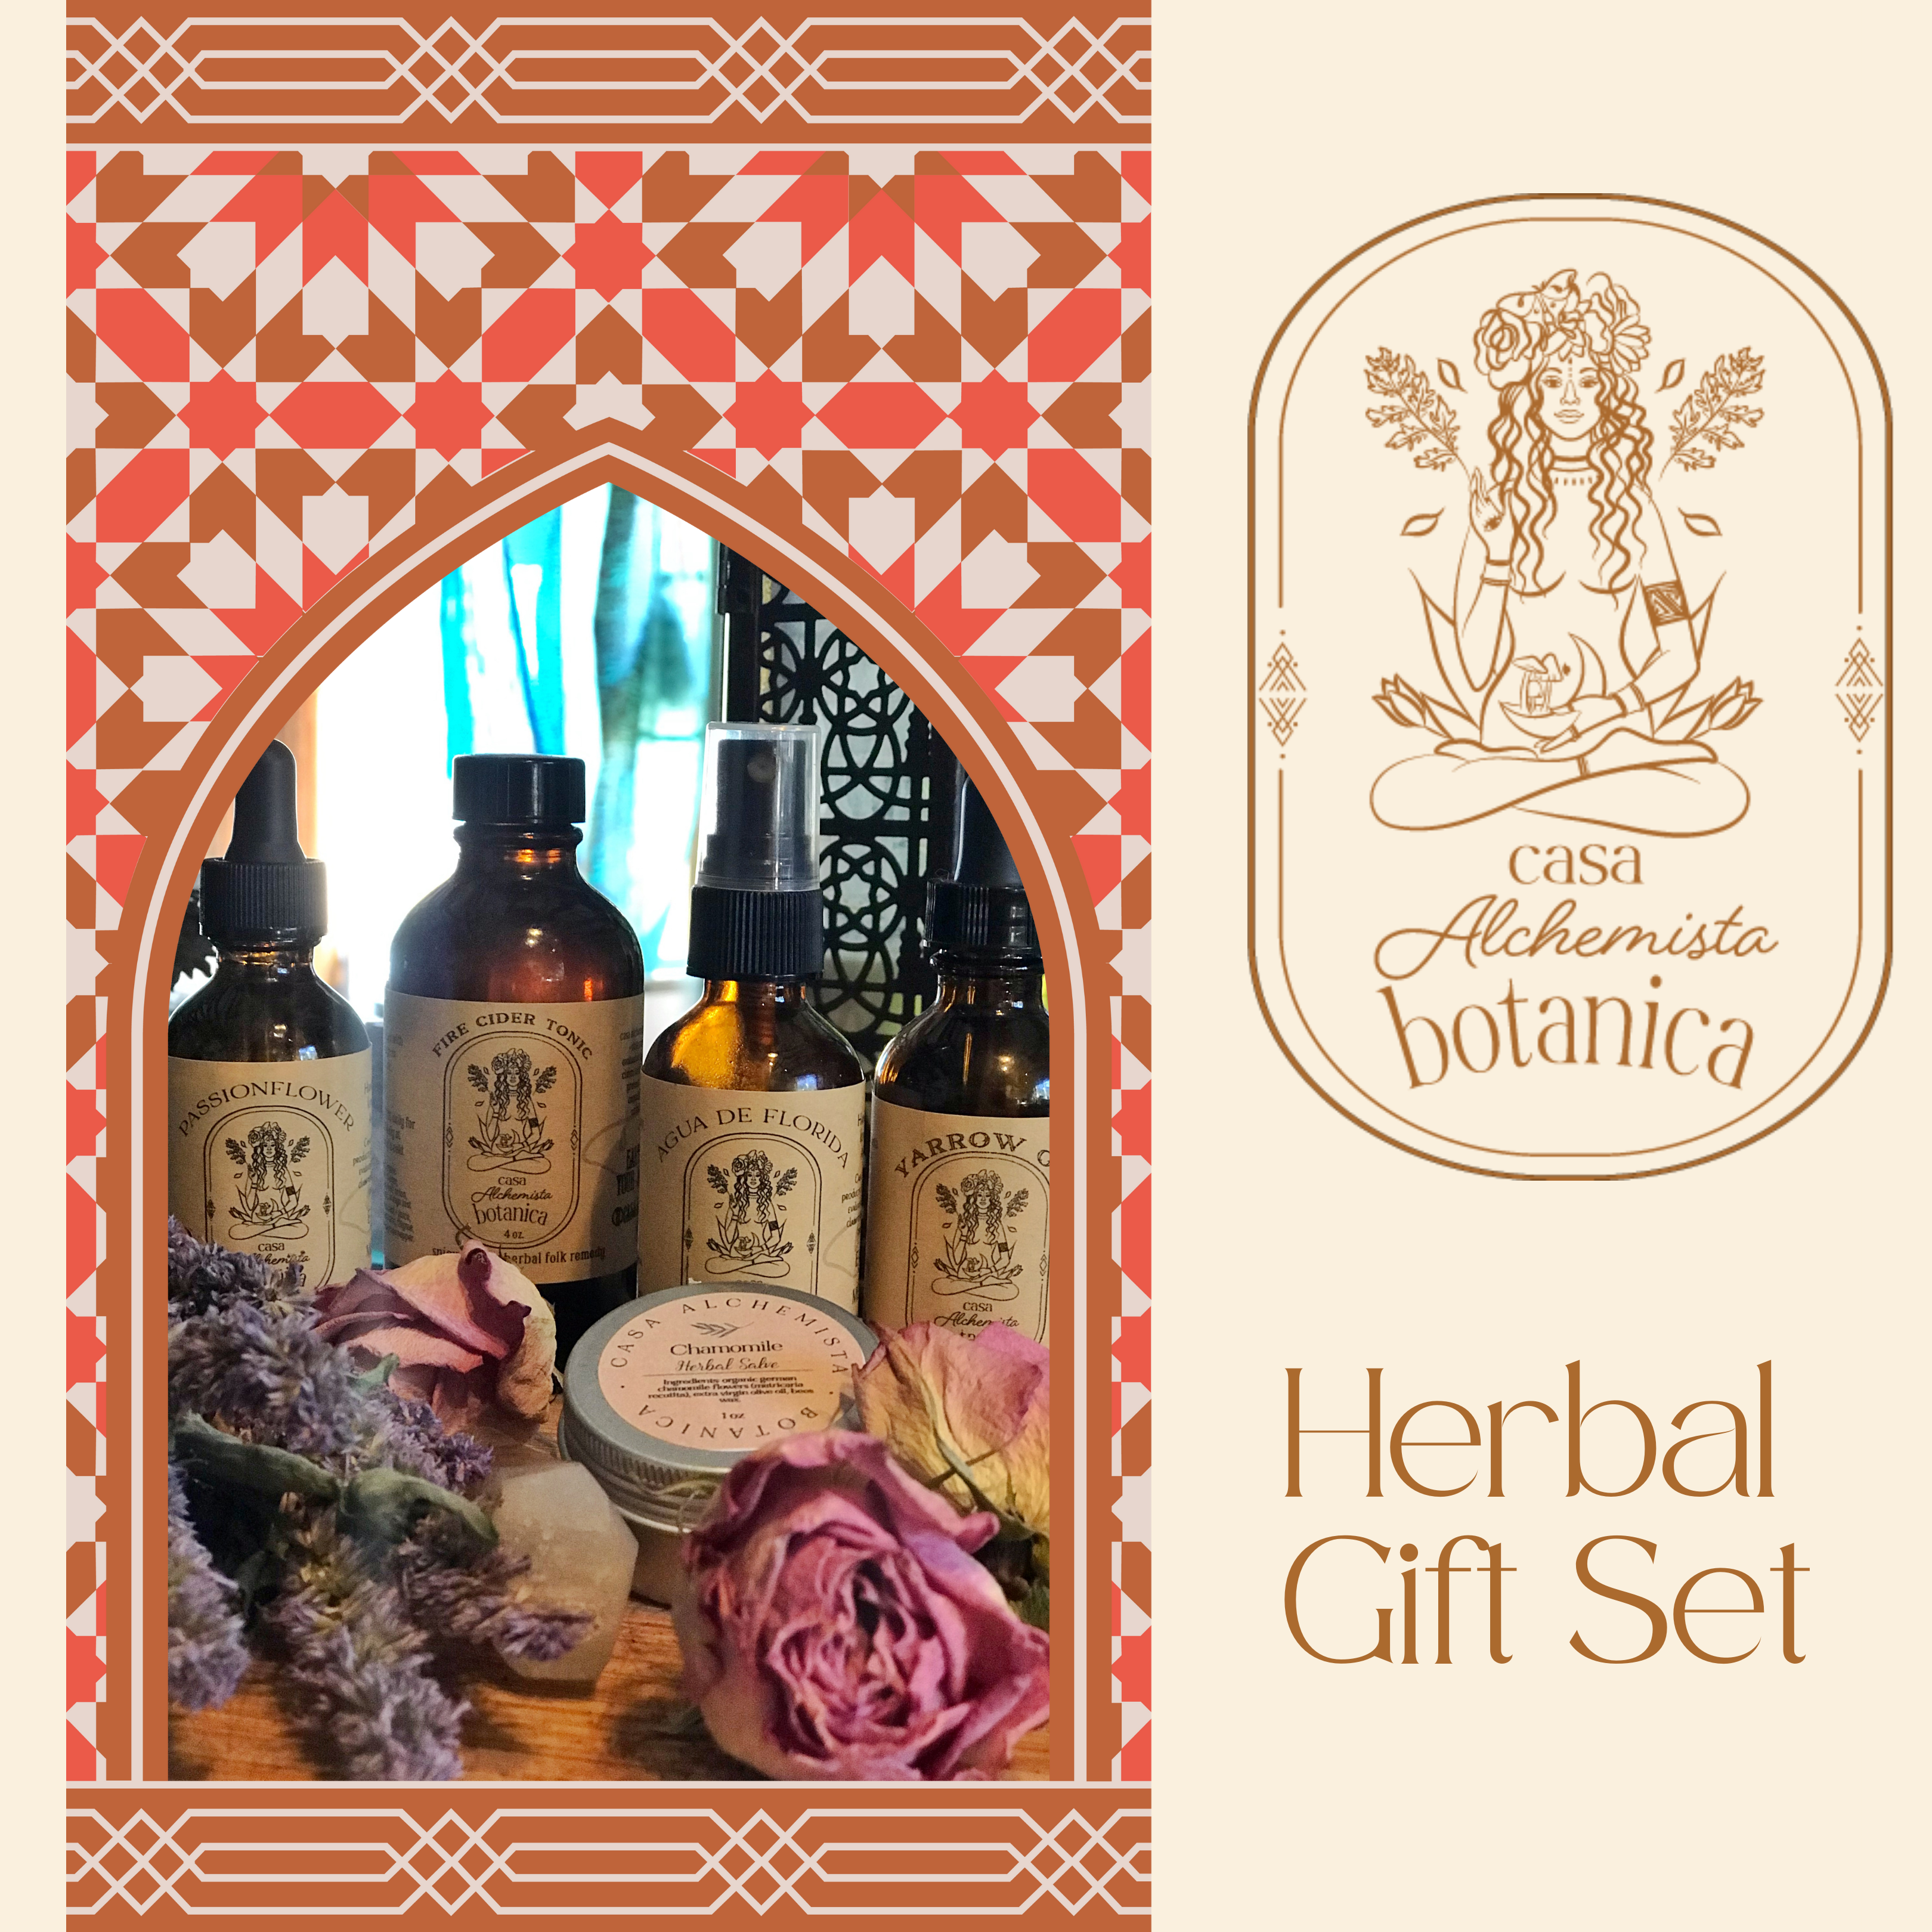 Herbal Gift Set from Casa Alchemista Botanica